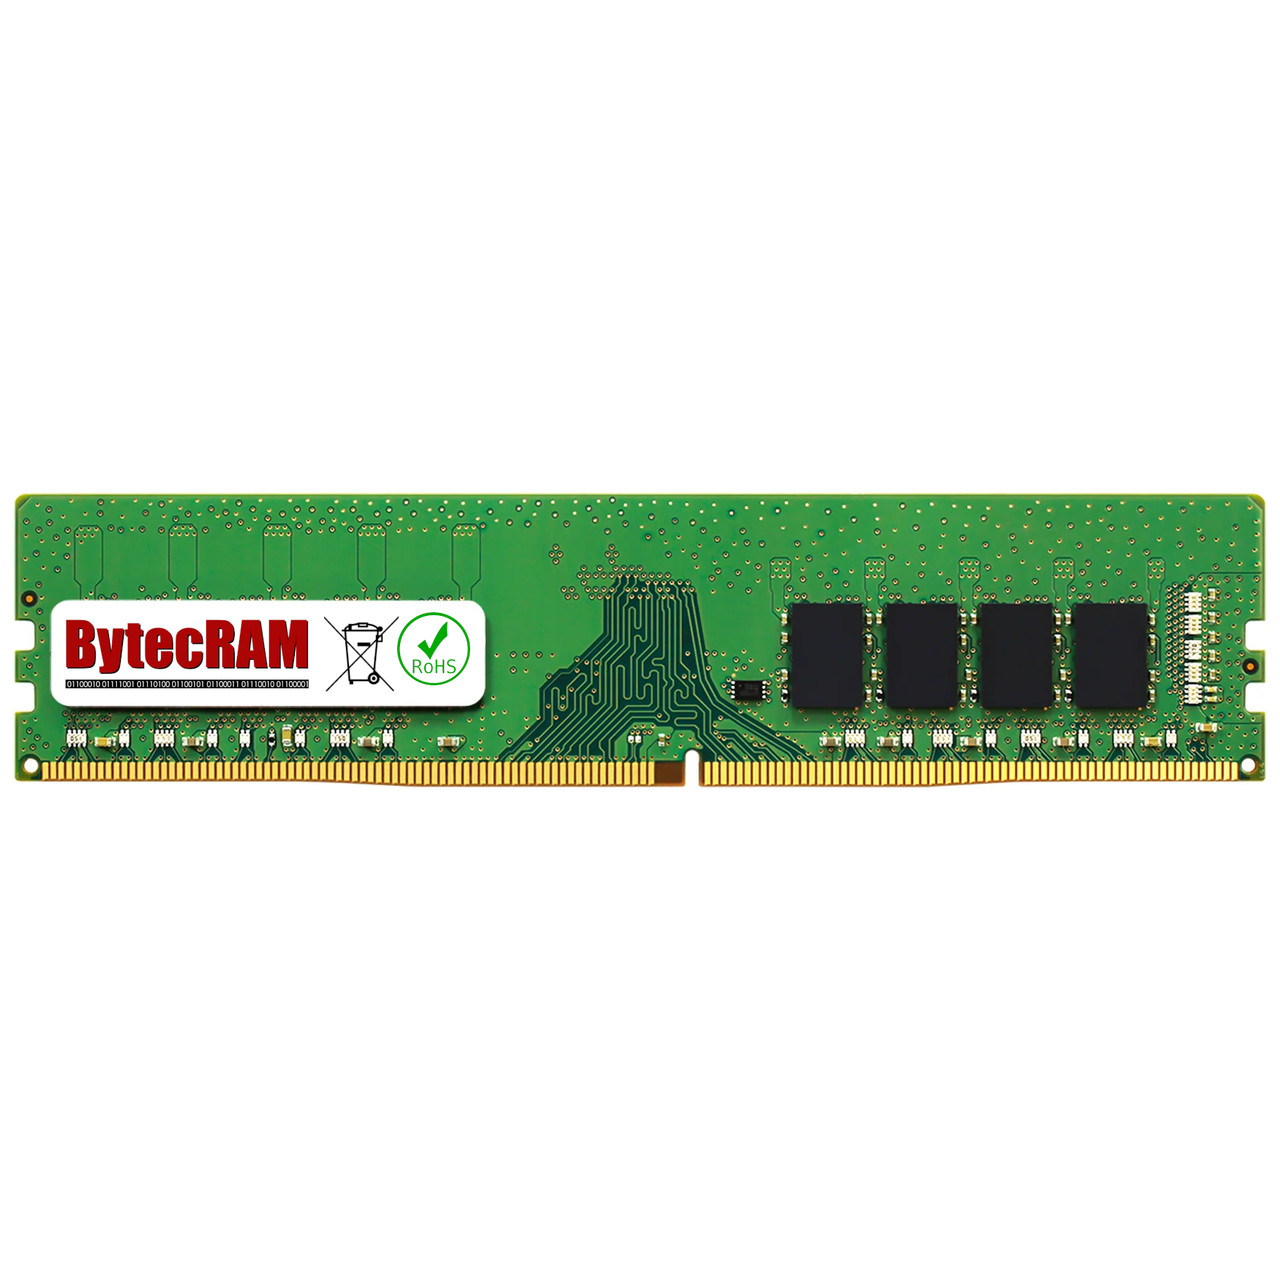 eBay*8GB Acer PO5-610-UR13 DDR4 2666MHz UDIMM Memory RAM Upgrade